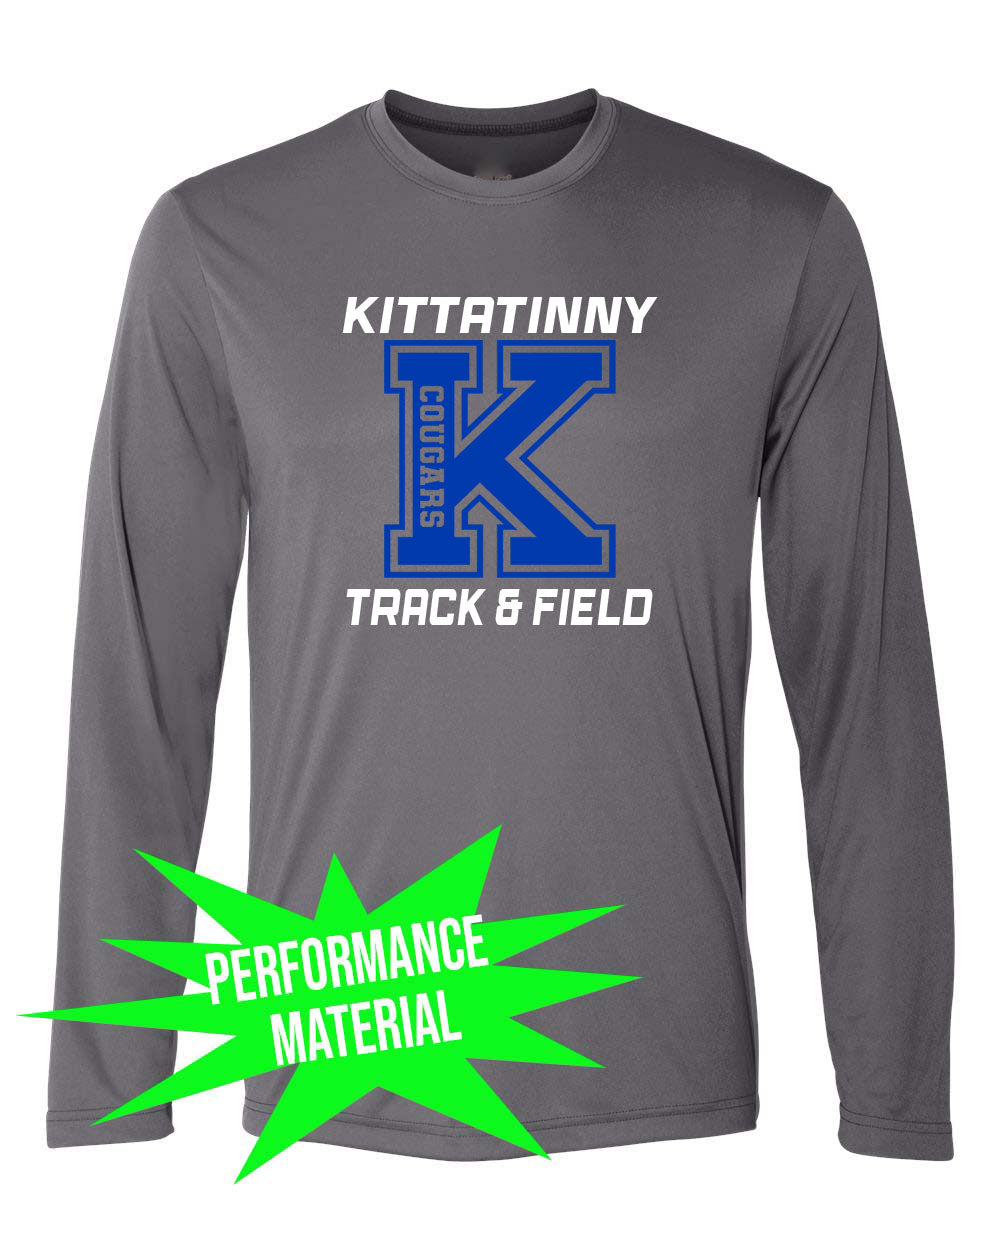 Kittatinny Track Performance Material Design 3 Long Sleeve Shirt